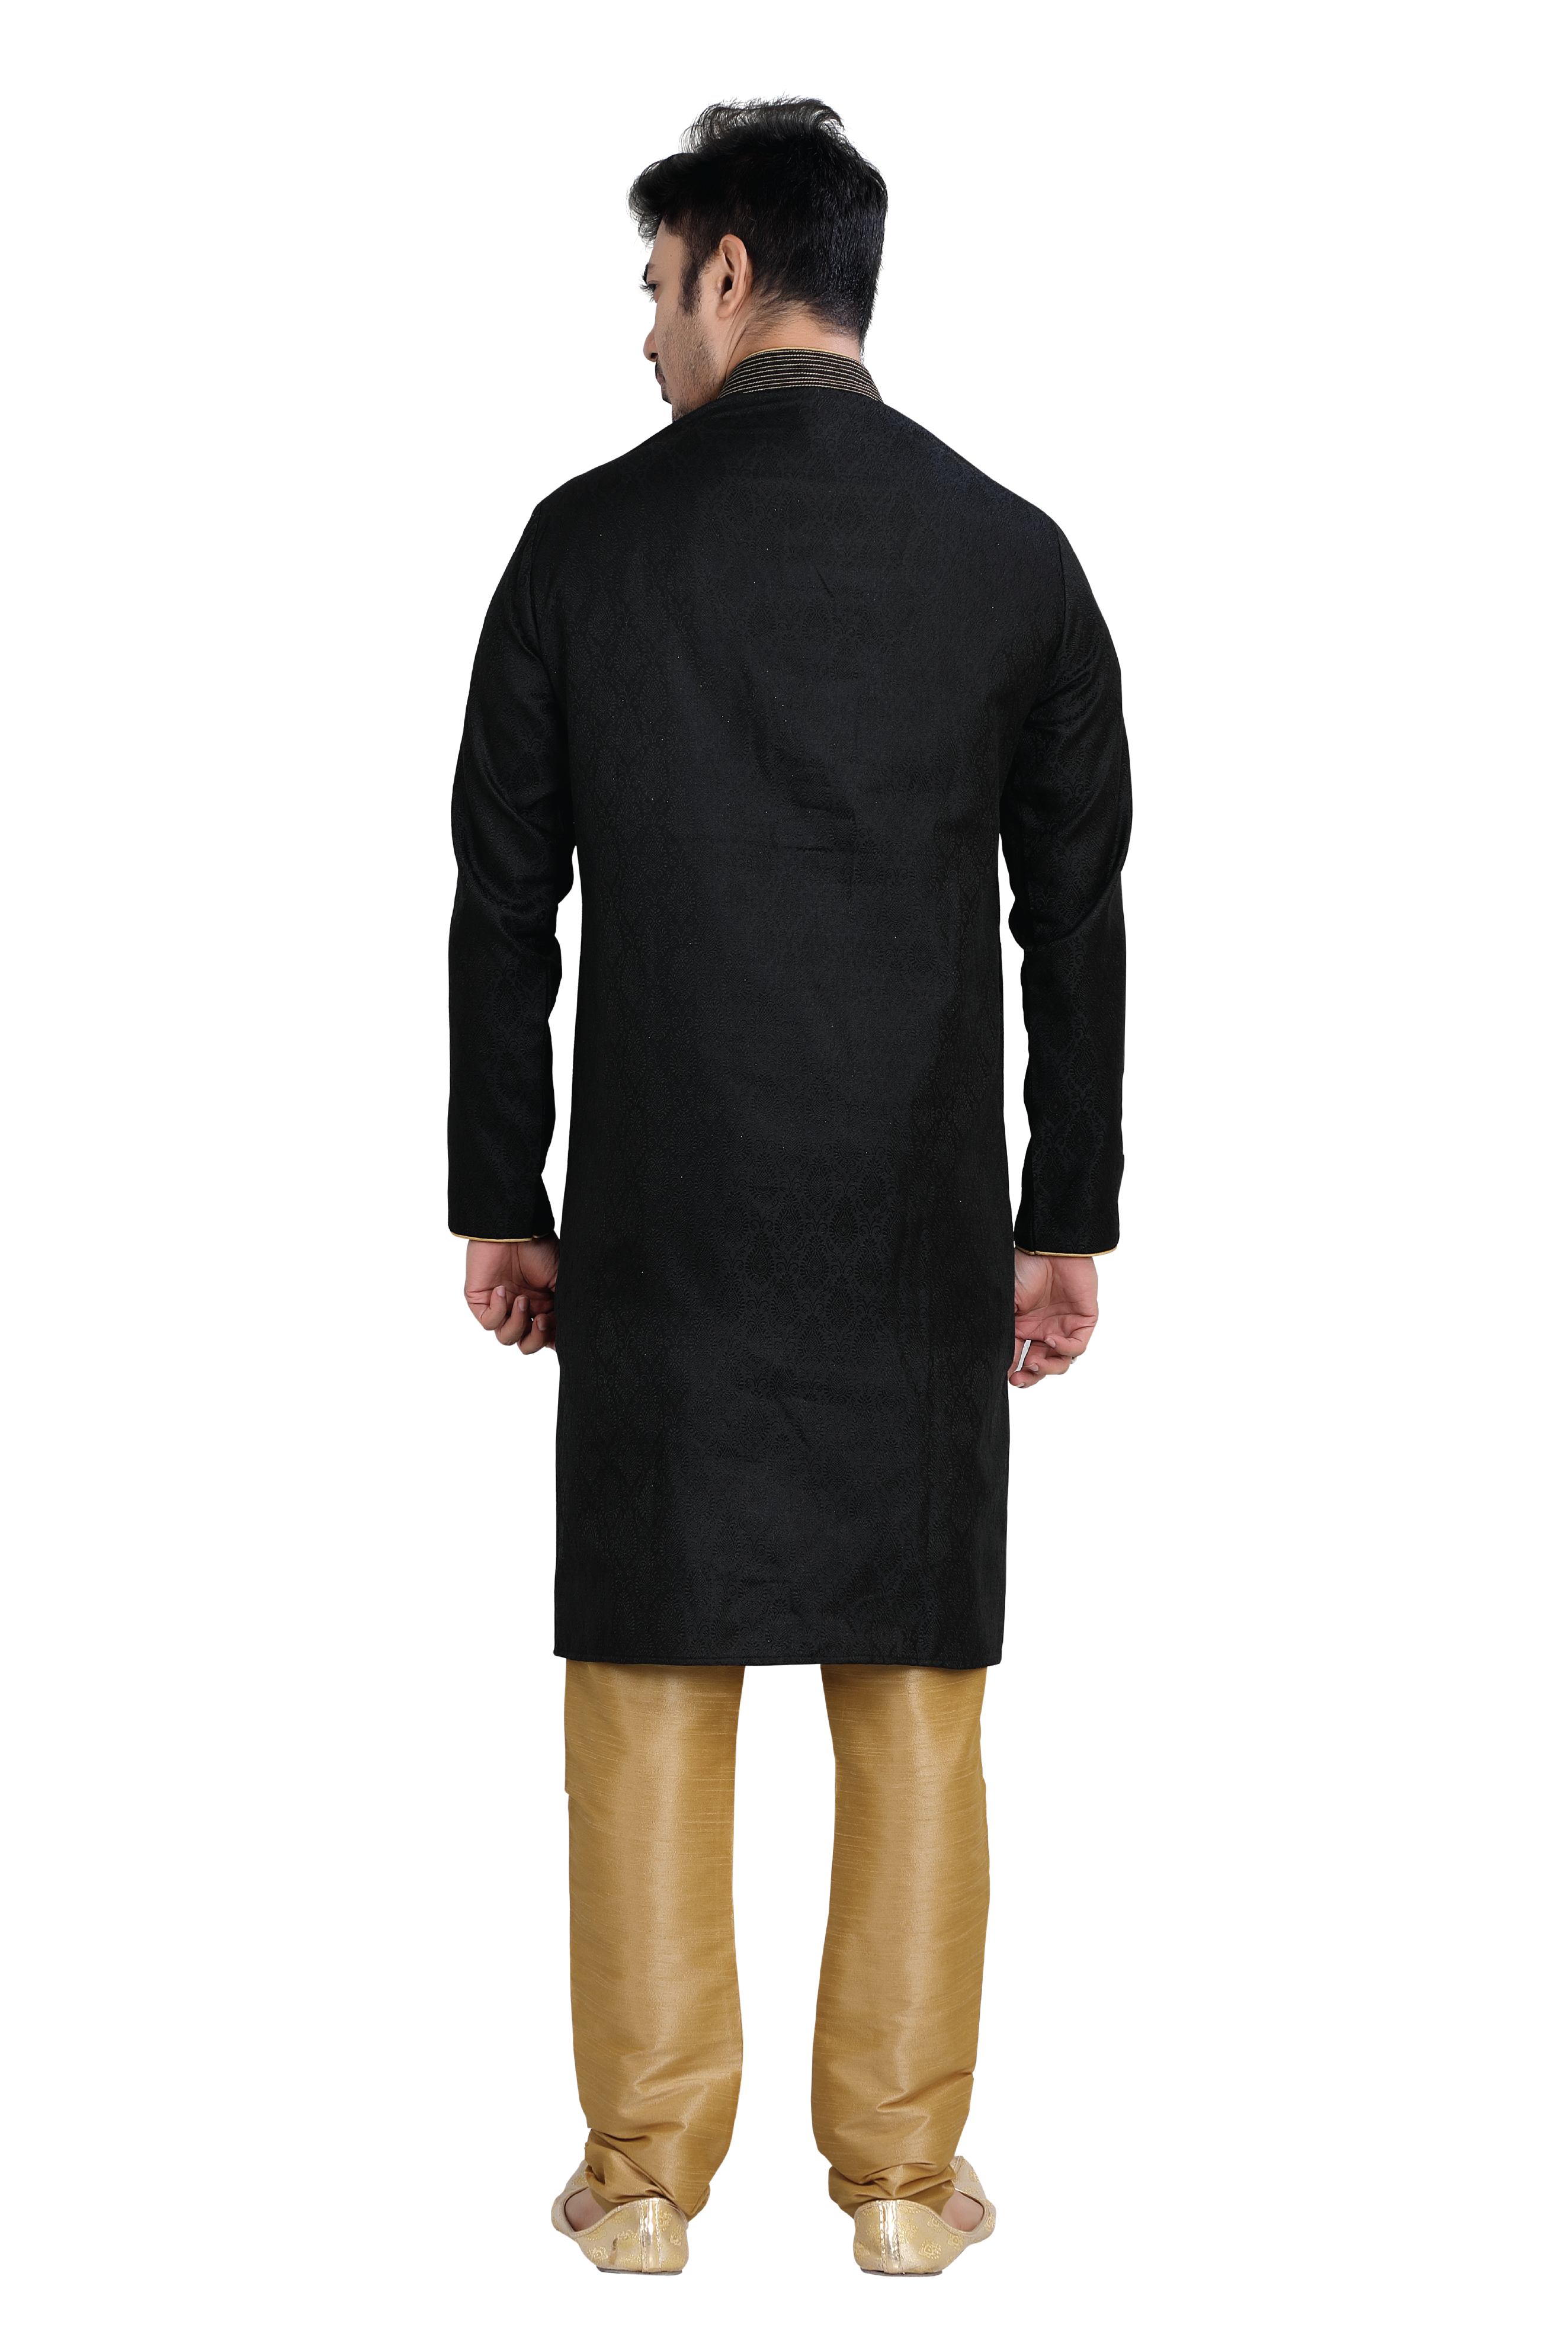 Anchor Embroidery  Banarasi Soft Silk Kurta Pajama in Black Color - Premium kurta pajama from Dapper Ethnic - Just $119! Shop now at Dulhan Exclusives